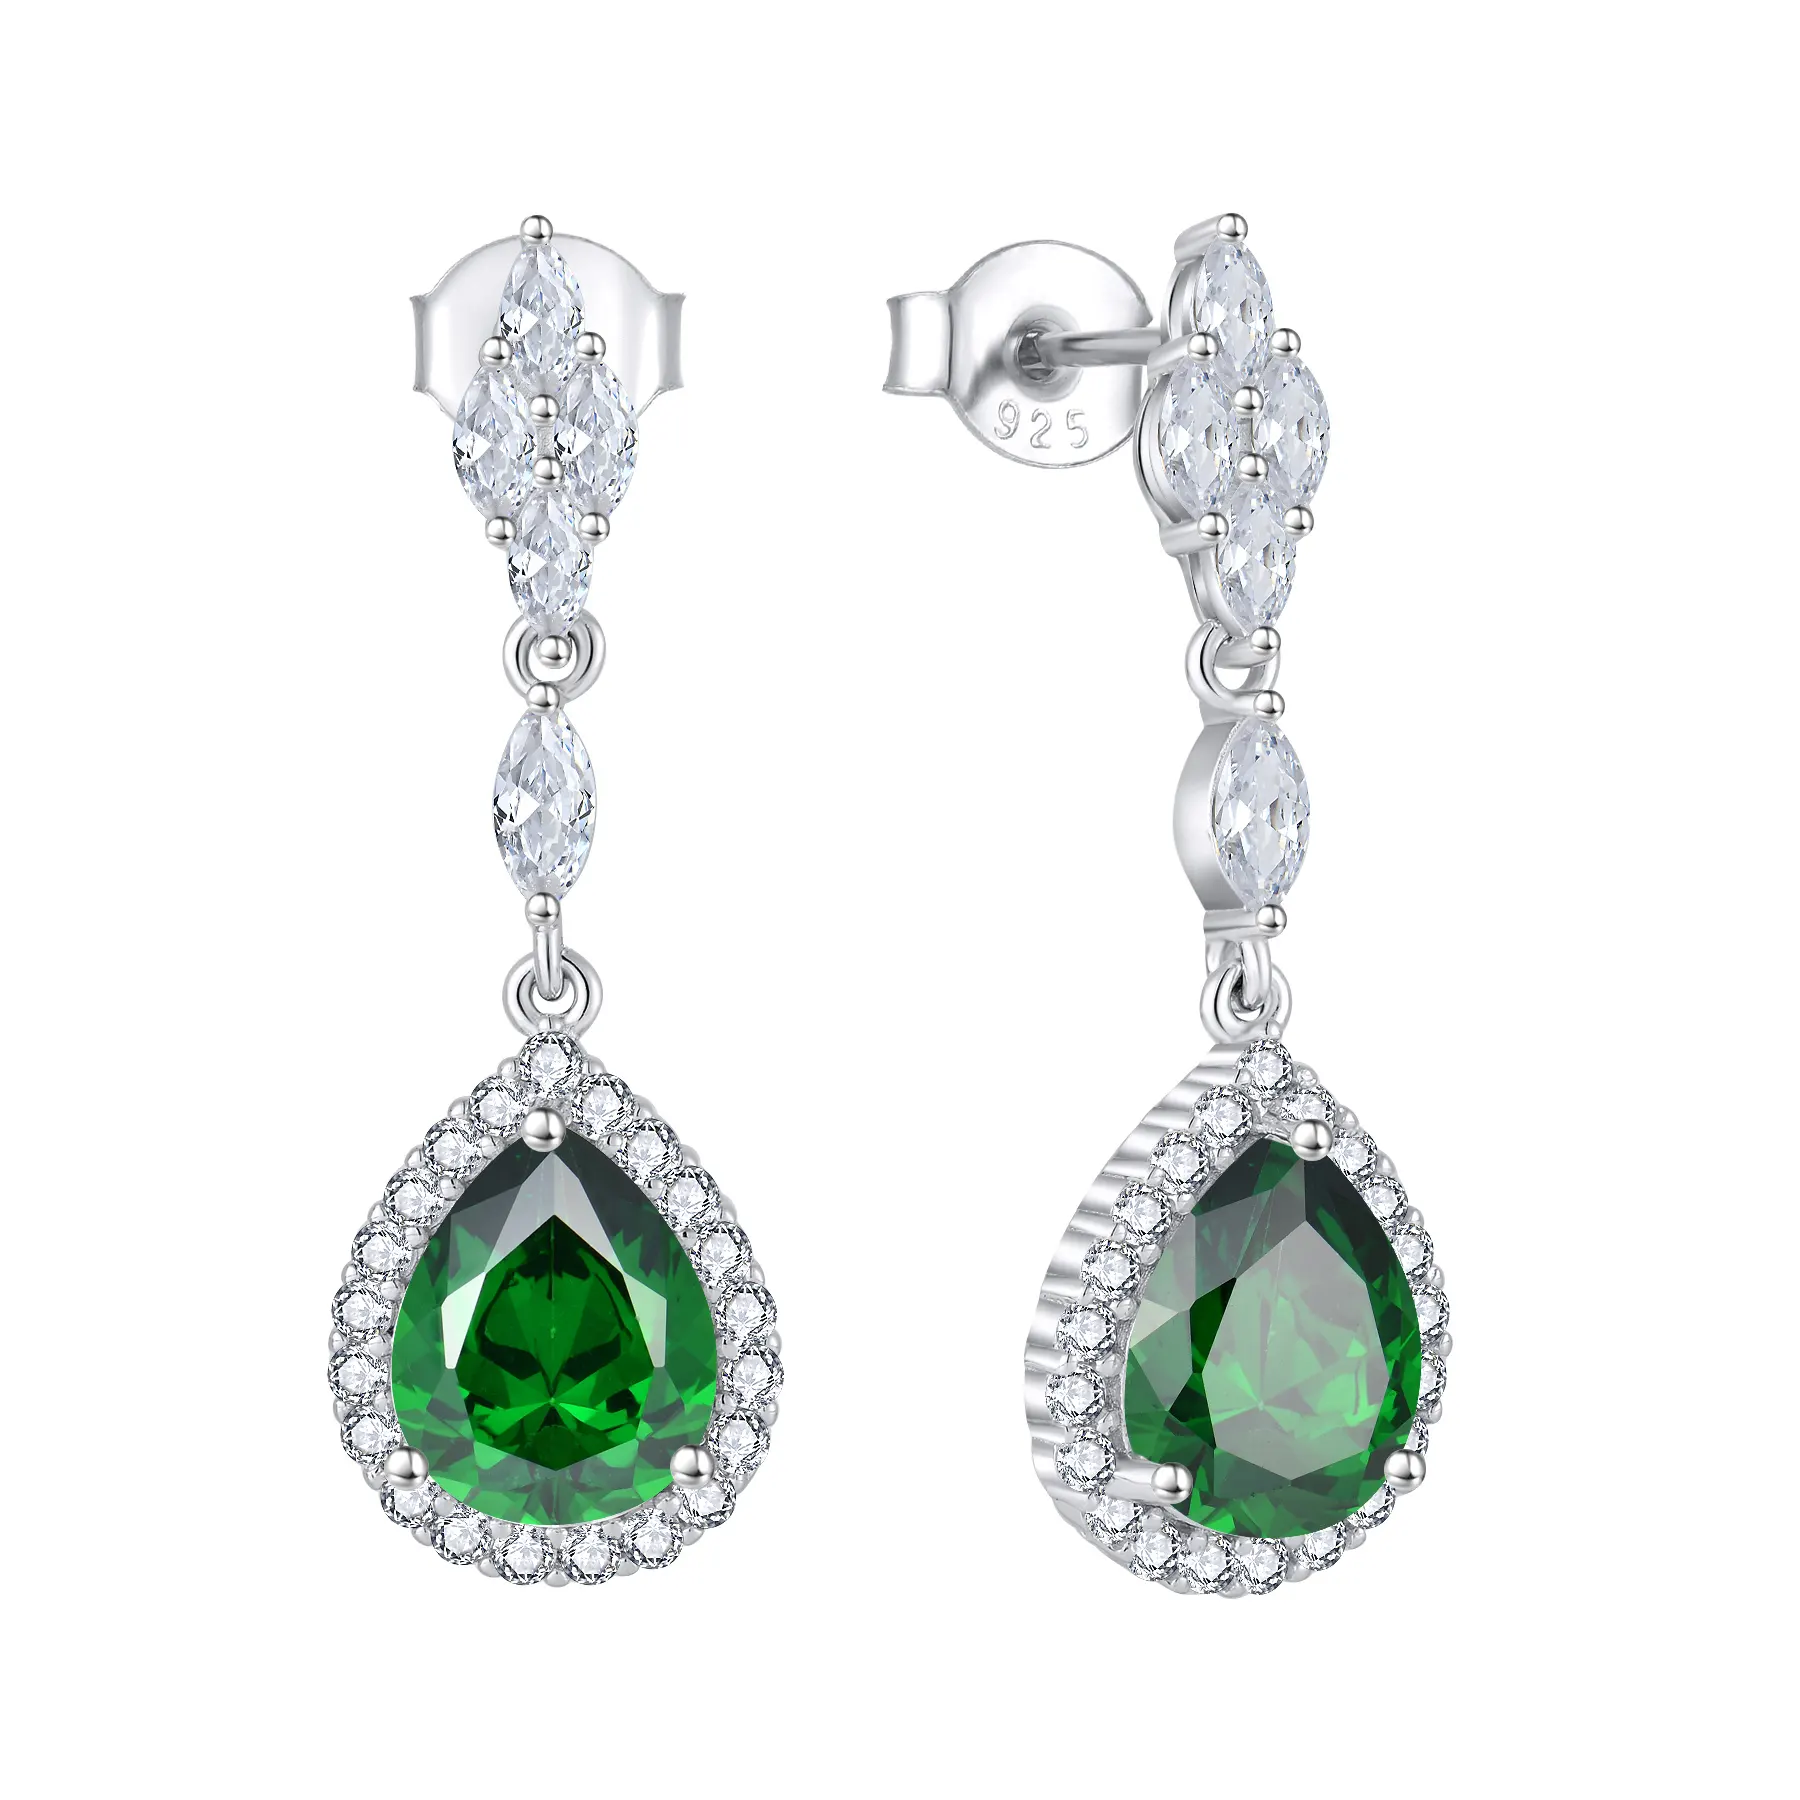 Brincos de prata esterlina 925 para noiva, joia esmeralda com pingente de diamante esmeralda, joia com pedras preciosas verdes